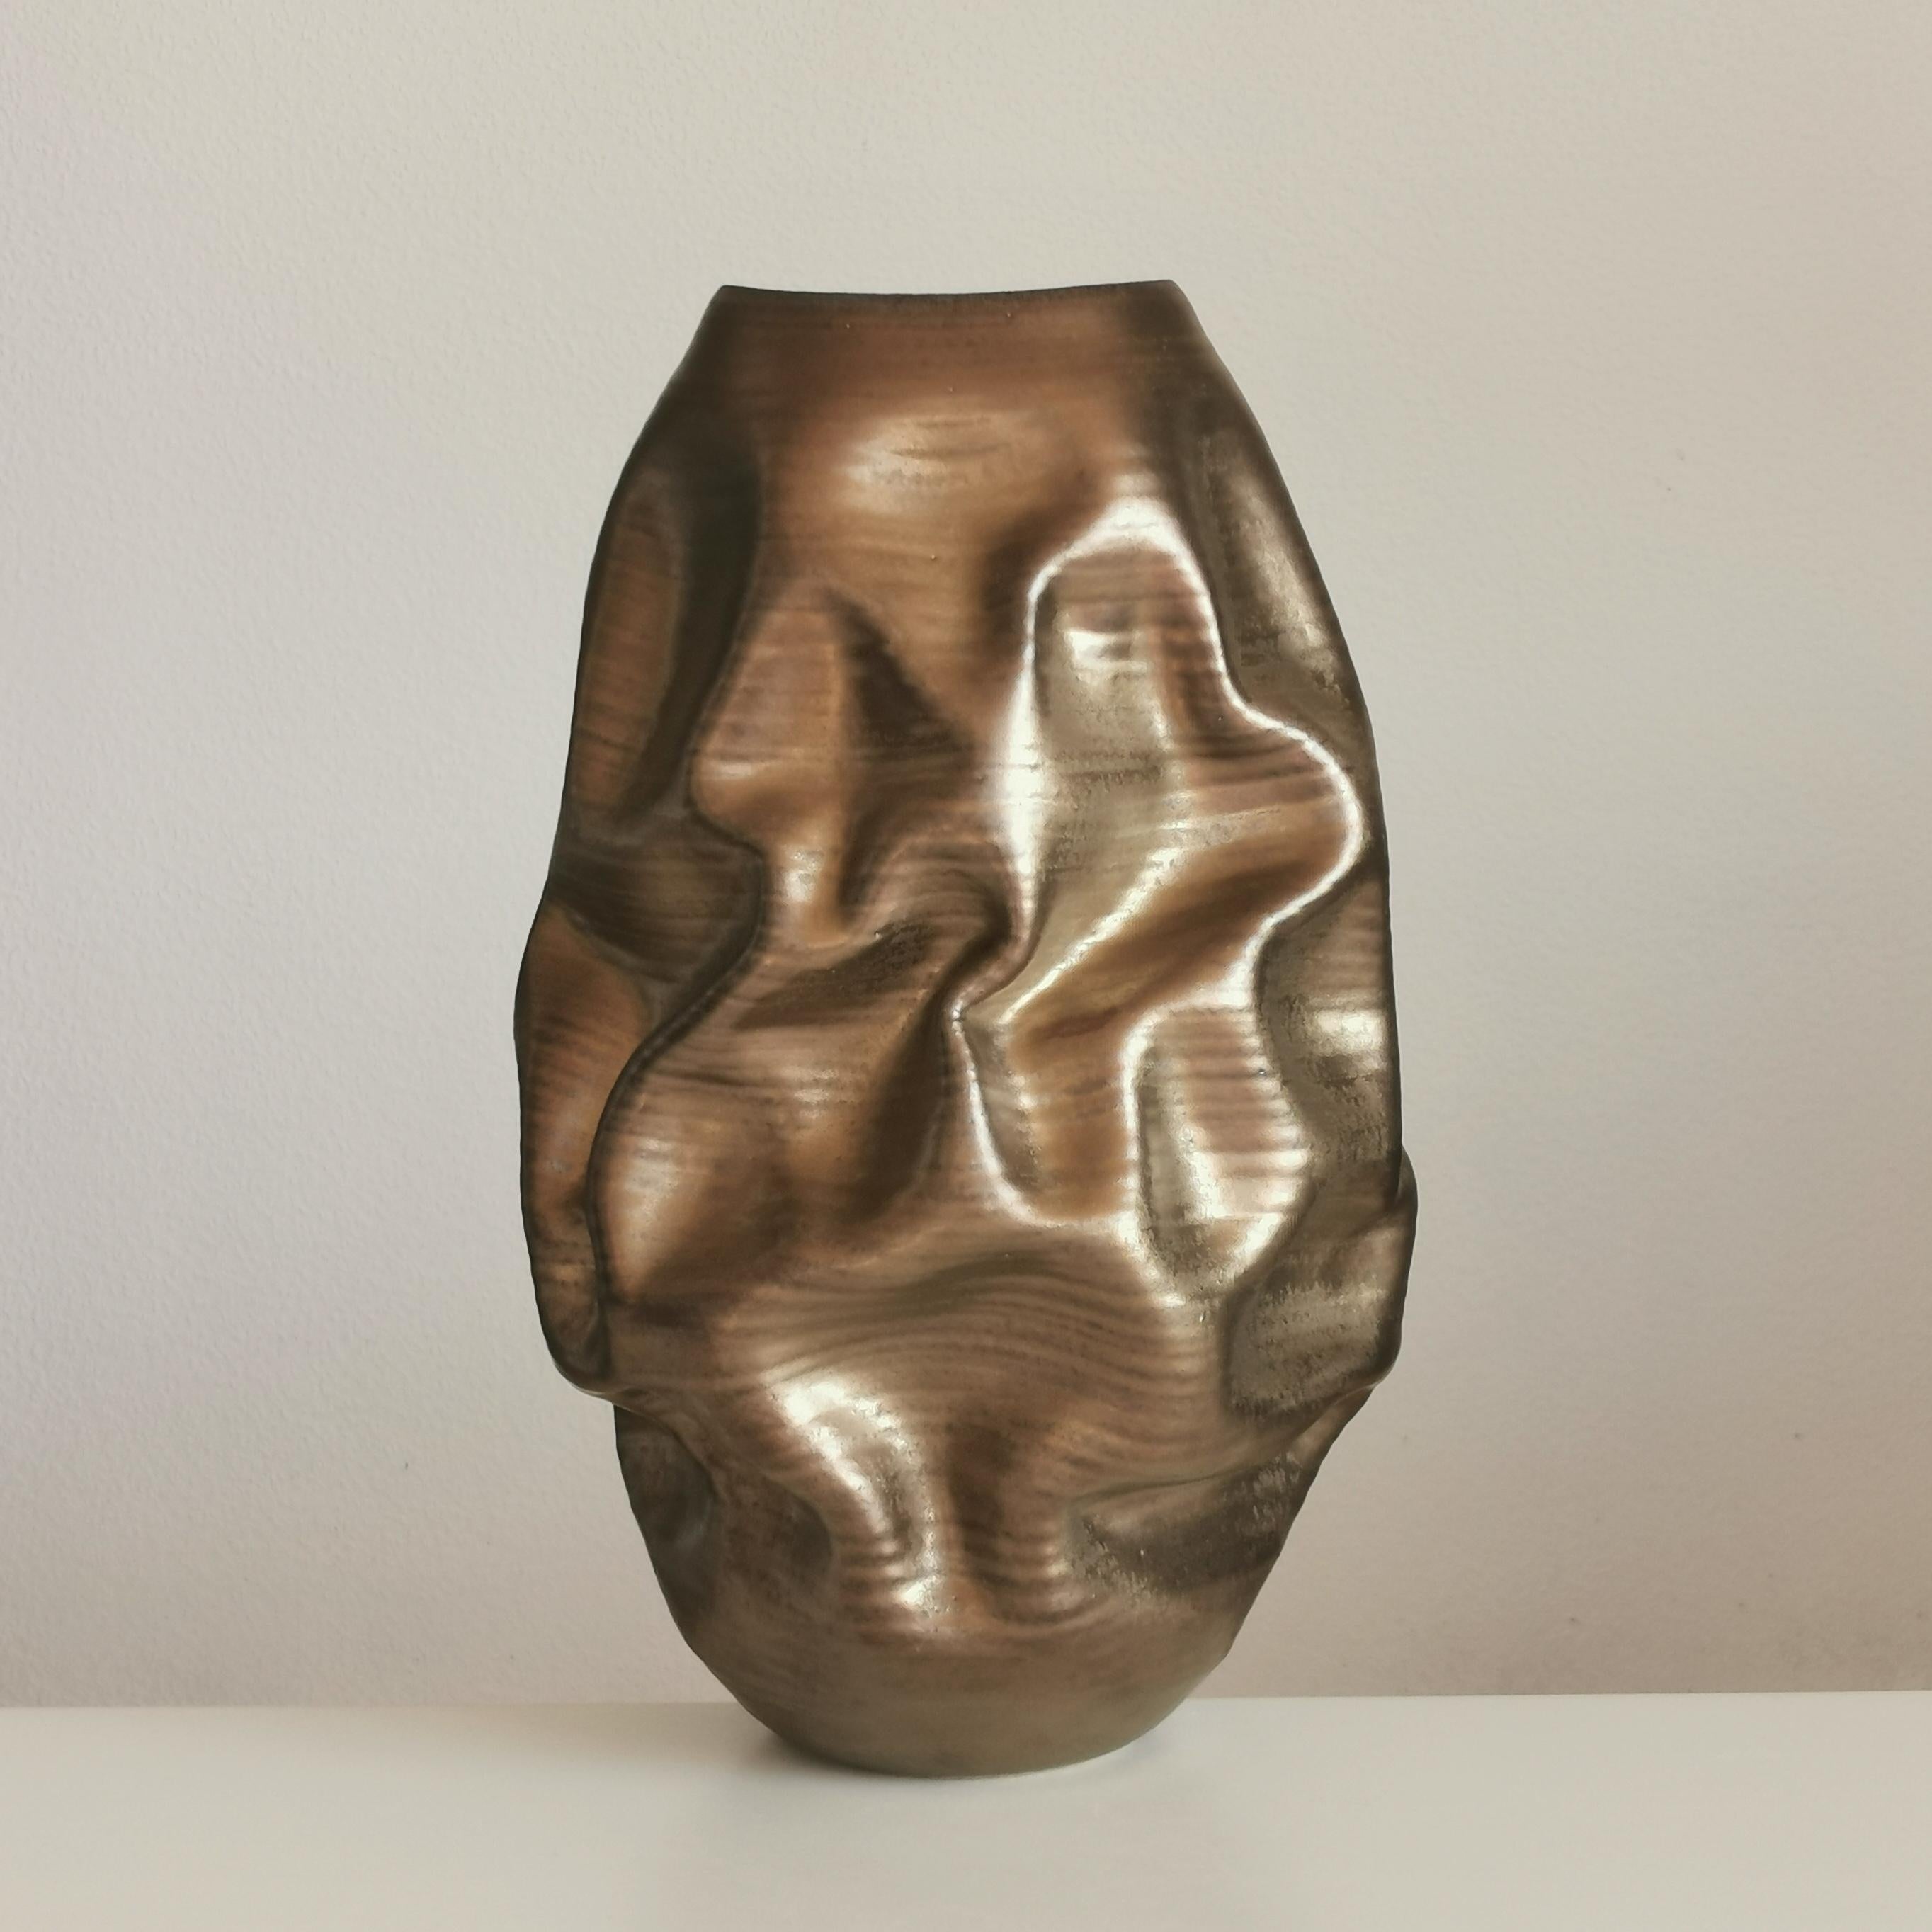 Contemporary Tall Golden Crumpled Form N.97, Medium Ceramic Sculpture, Objet D'Art